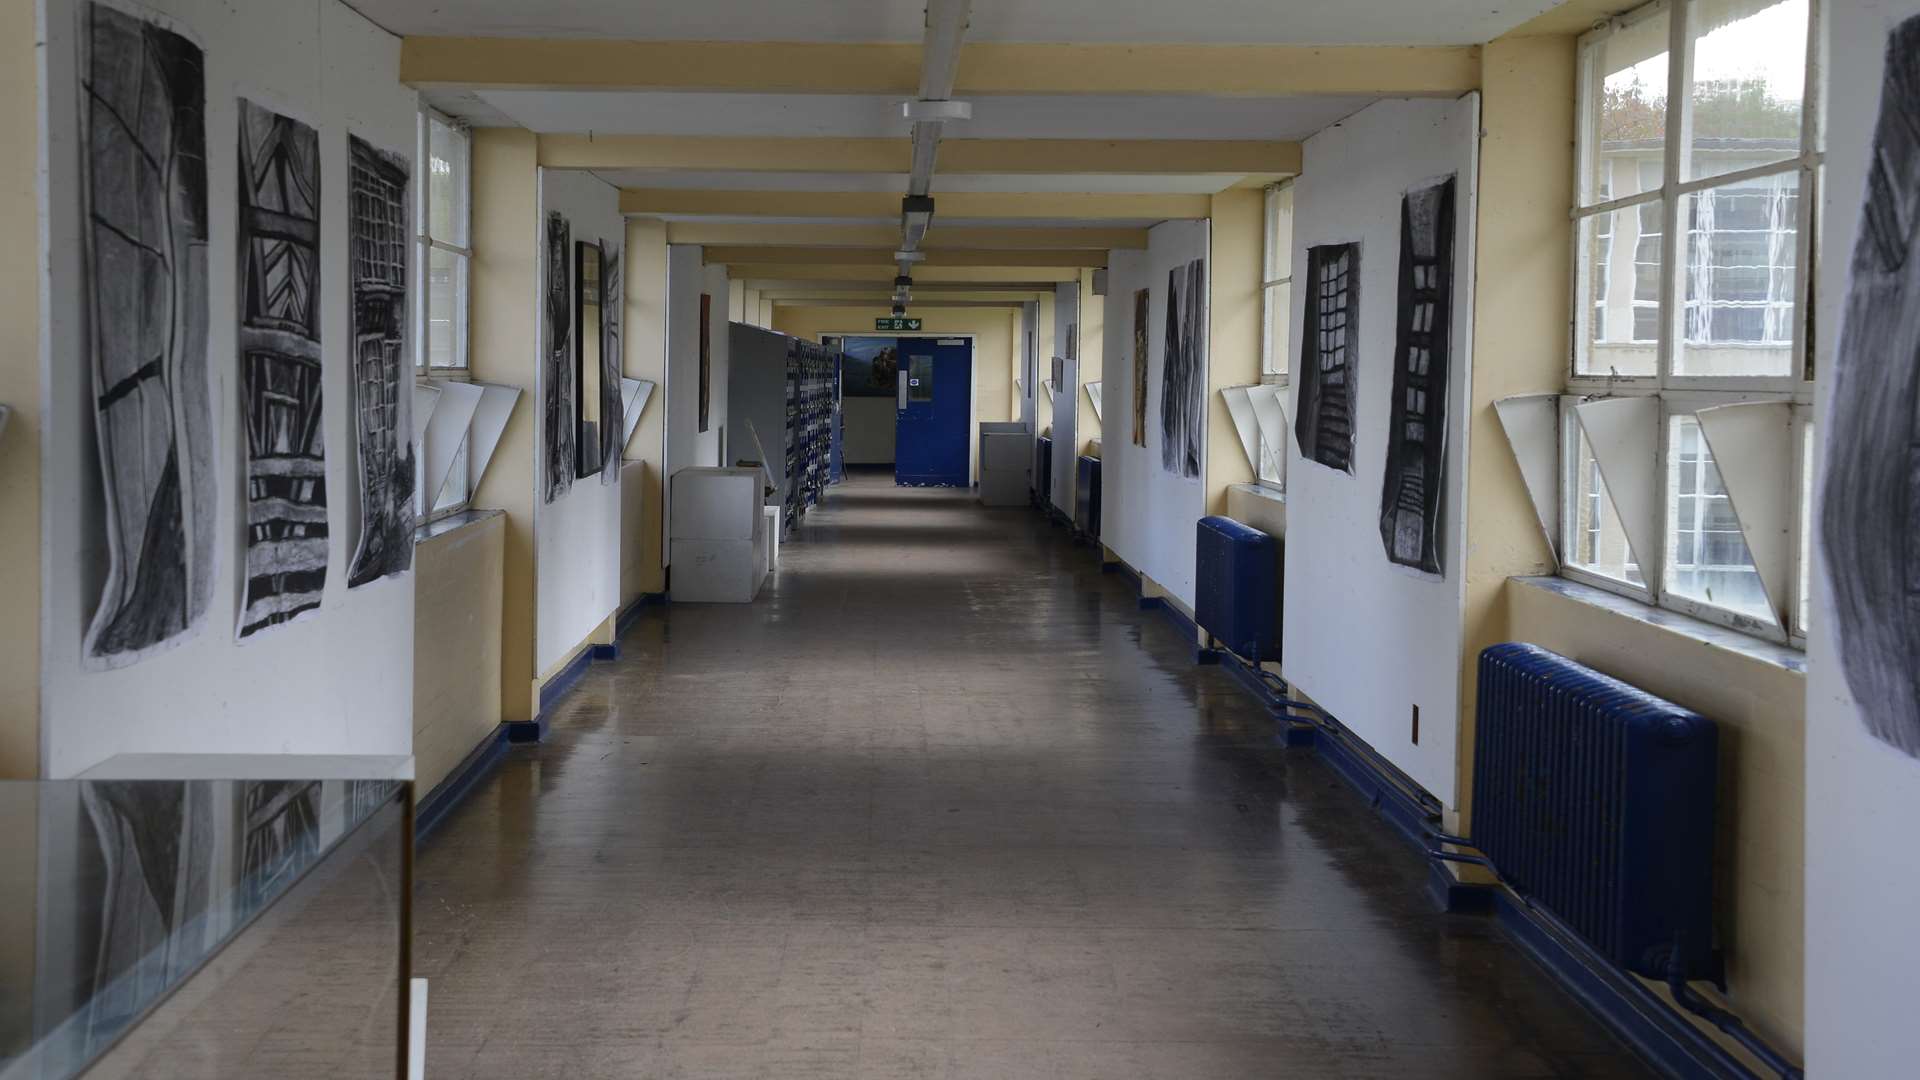 The much-heralded wide corridors at Simon Langton Girls' School